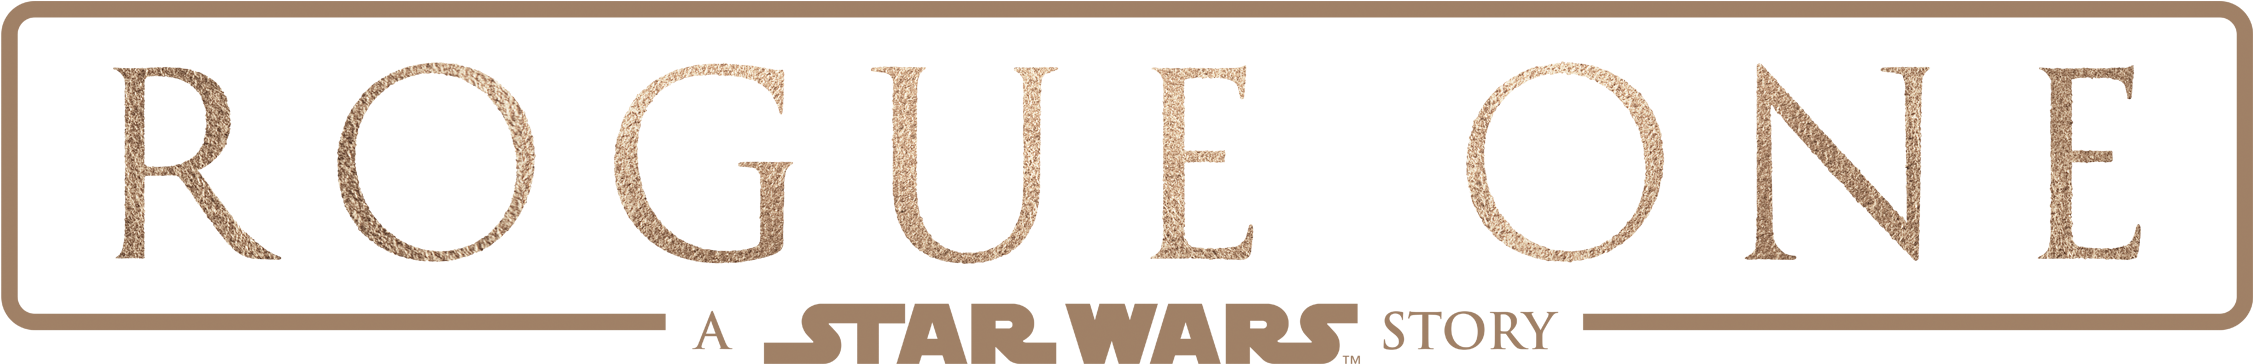 Rogue One Logo - Star Wars Battlefront 2 Logo (2306x504), Png Download